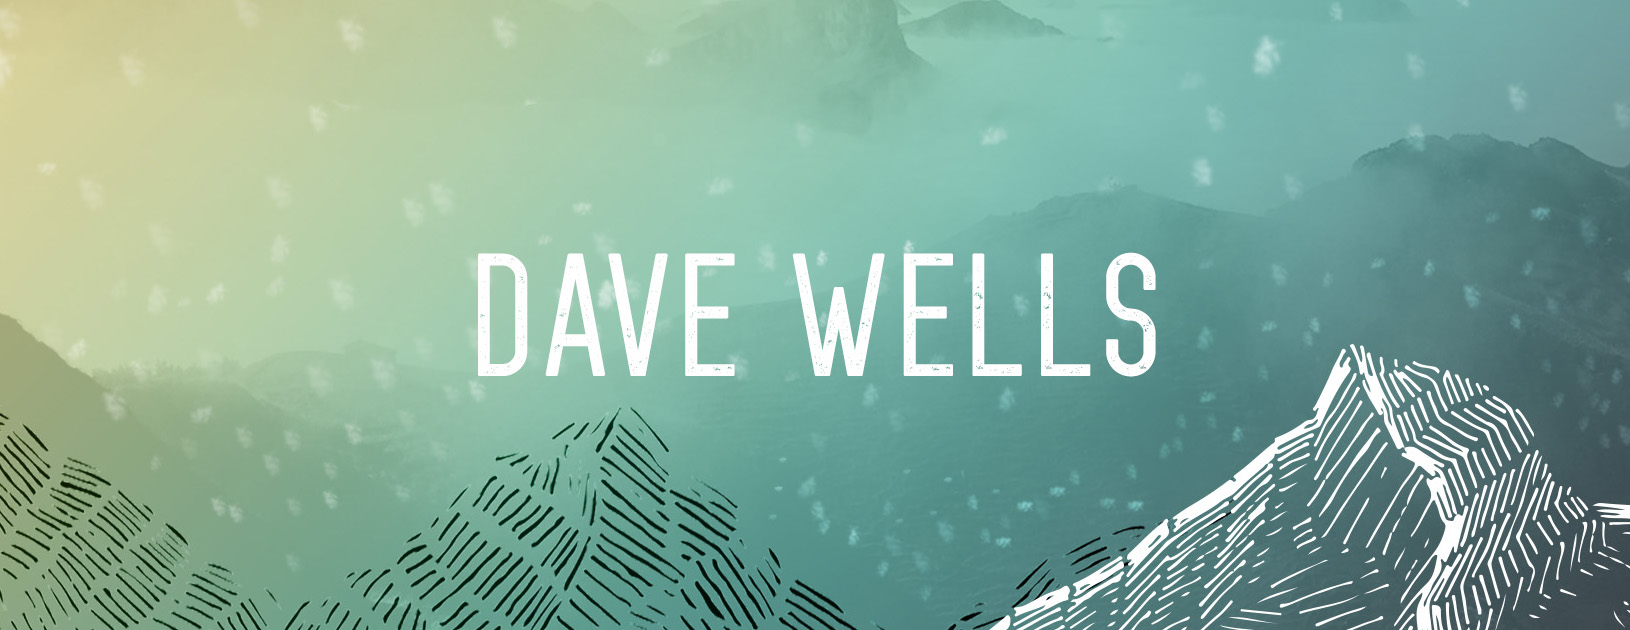 Dave Wells